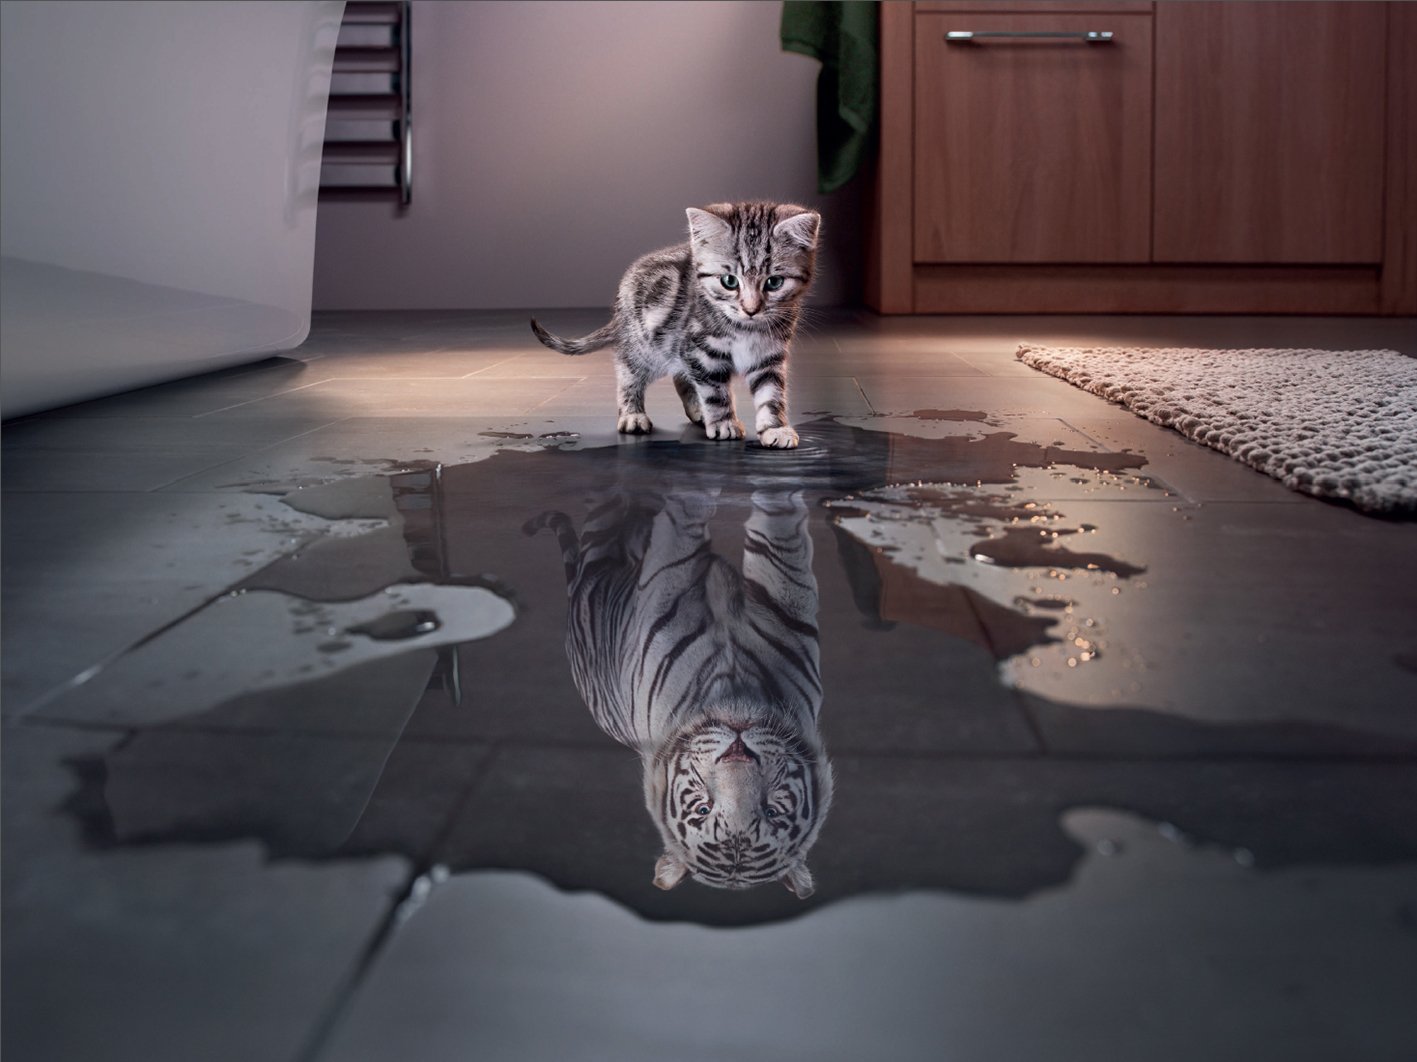 Kitten looking at reflection as tiger